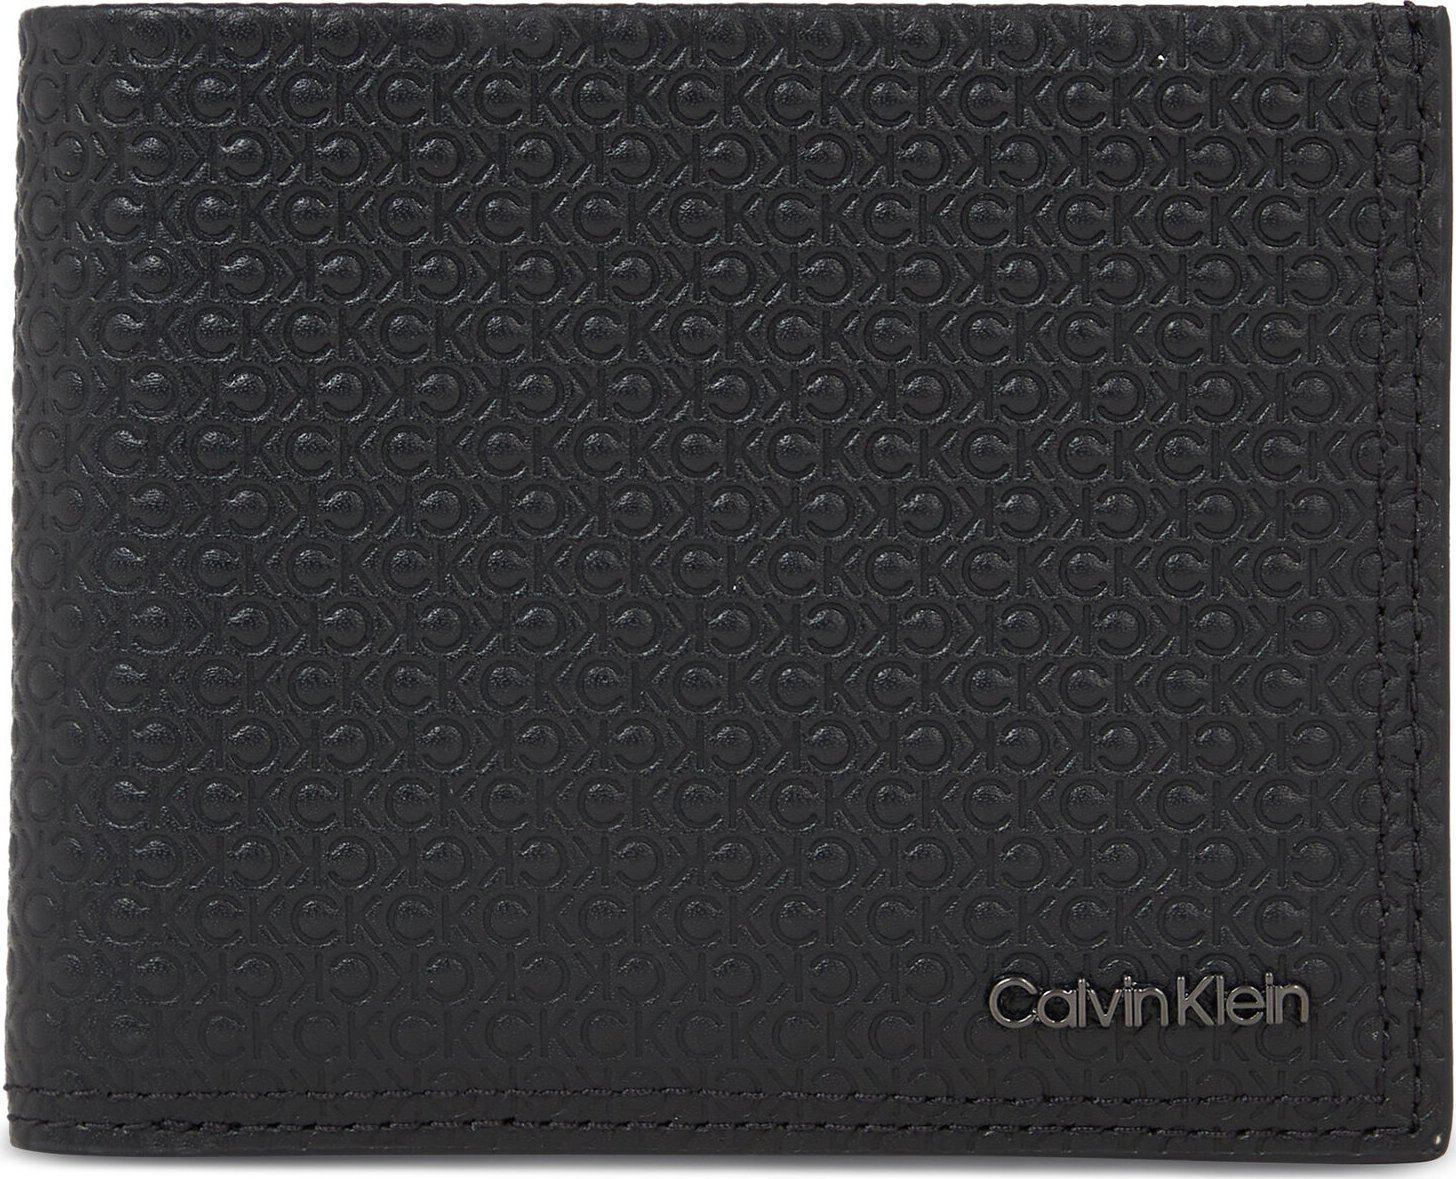 Pánská peněženka Calvin Klein Minimalism Bifold 5Cc W/Coin K50K510896 Black/Tonal Mono 01O